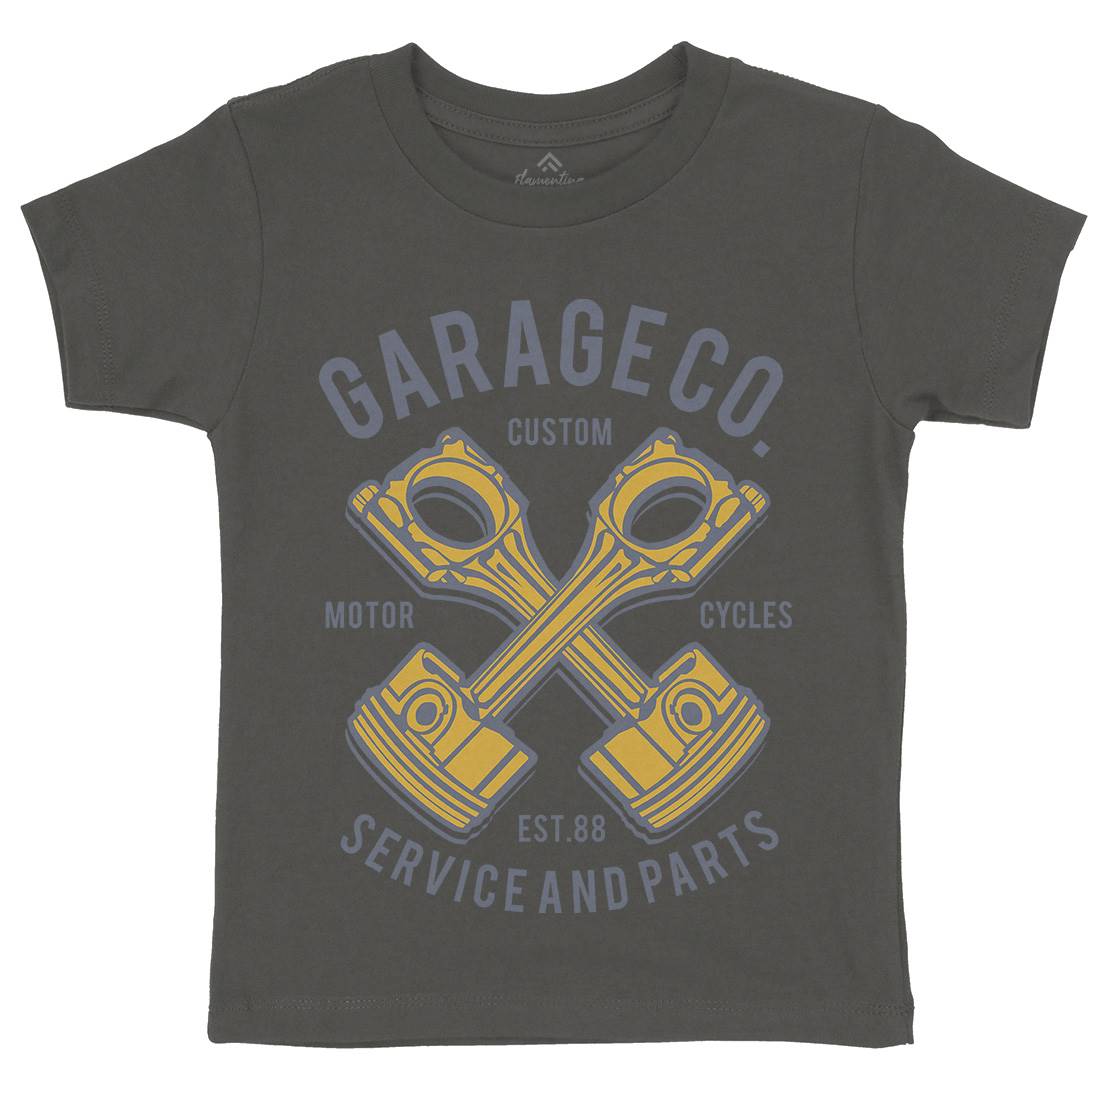 Garage Co Kids Crew Neck T-Shirt Cars B216